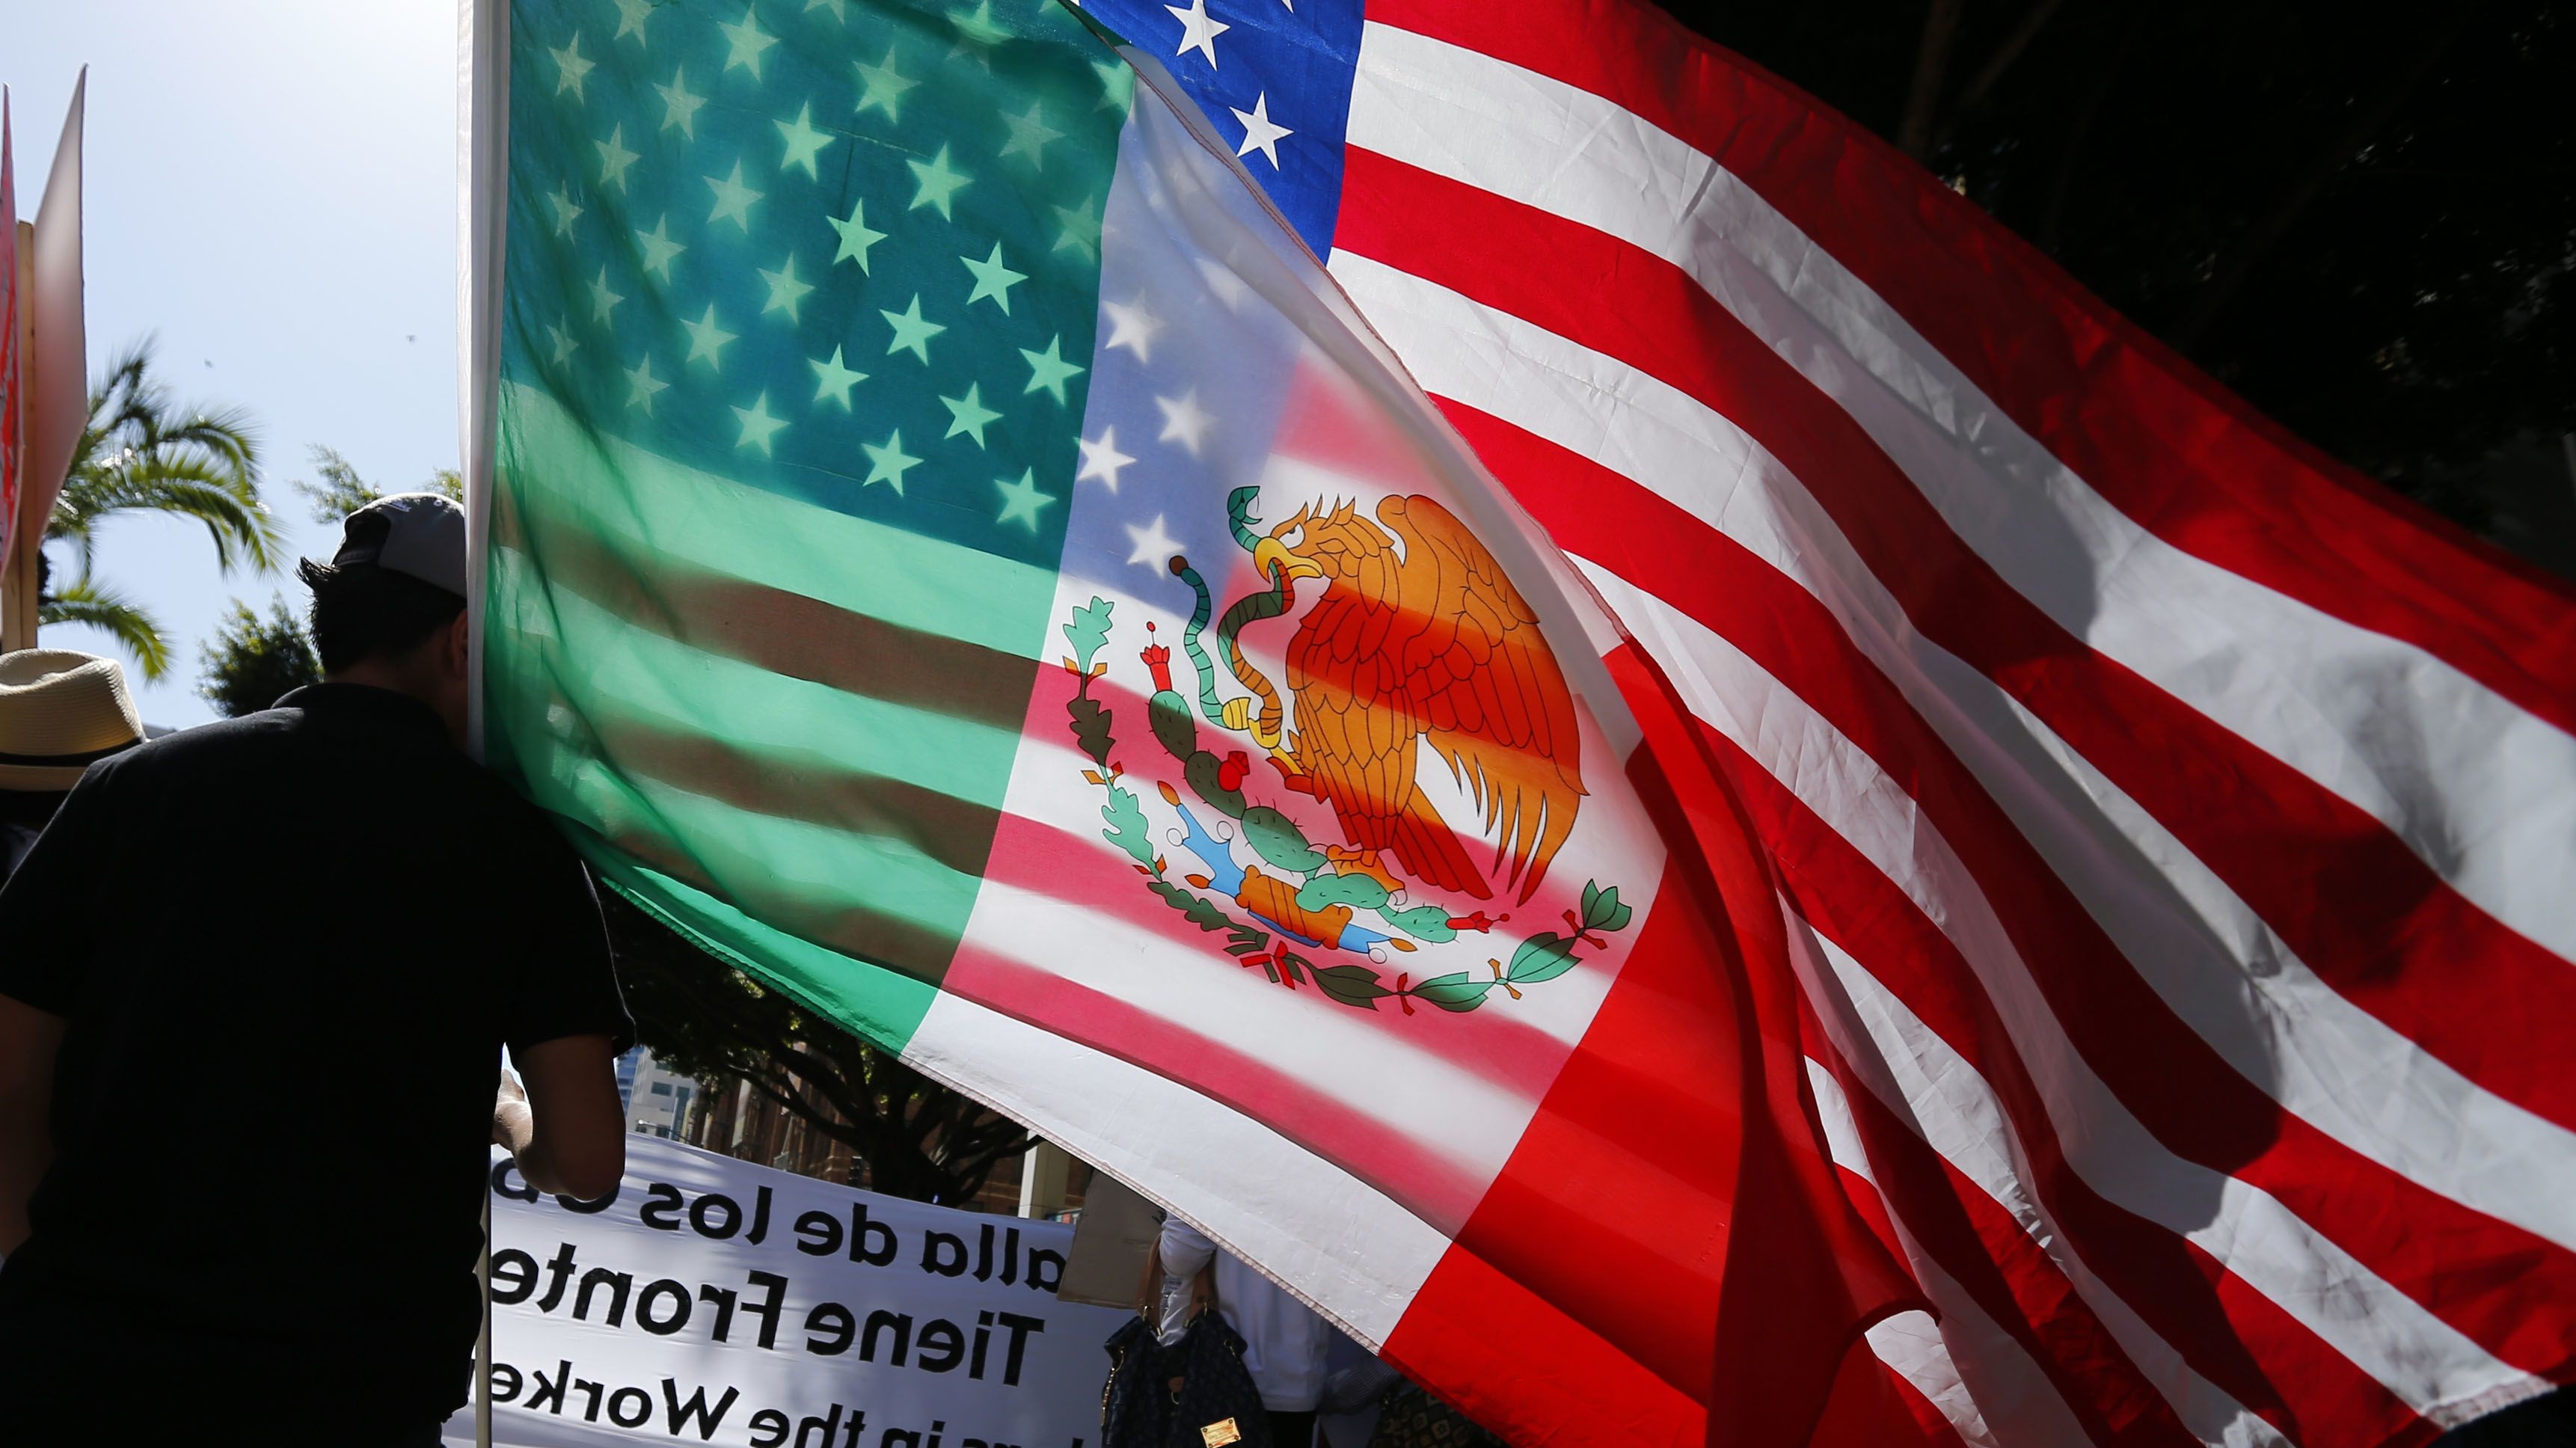 3444x1936 Best 25 Mexican american flag ideas on Pinterest | American flag .